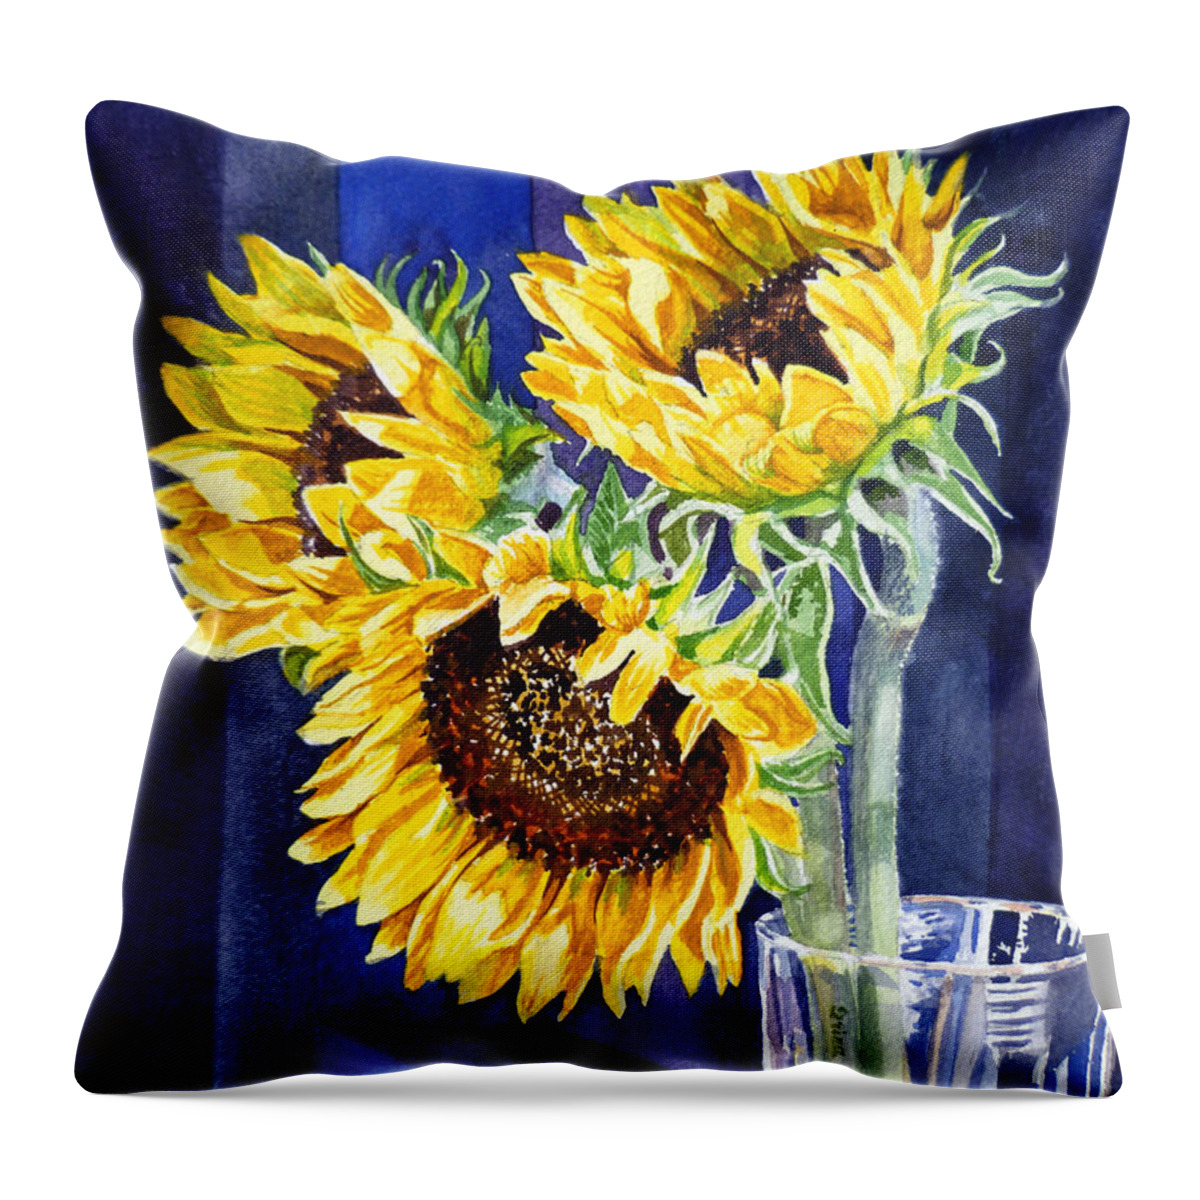 Sunflowers Throw Pillow featuring the painting Sunflowers #4 by Irina Sztukowski